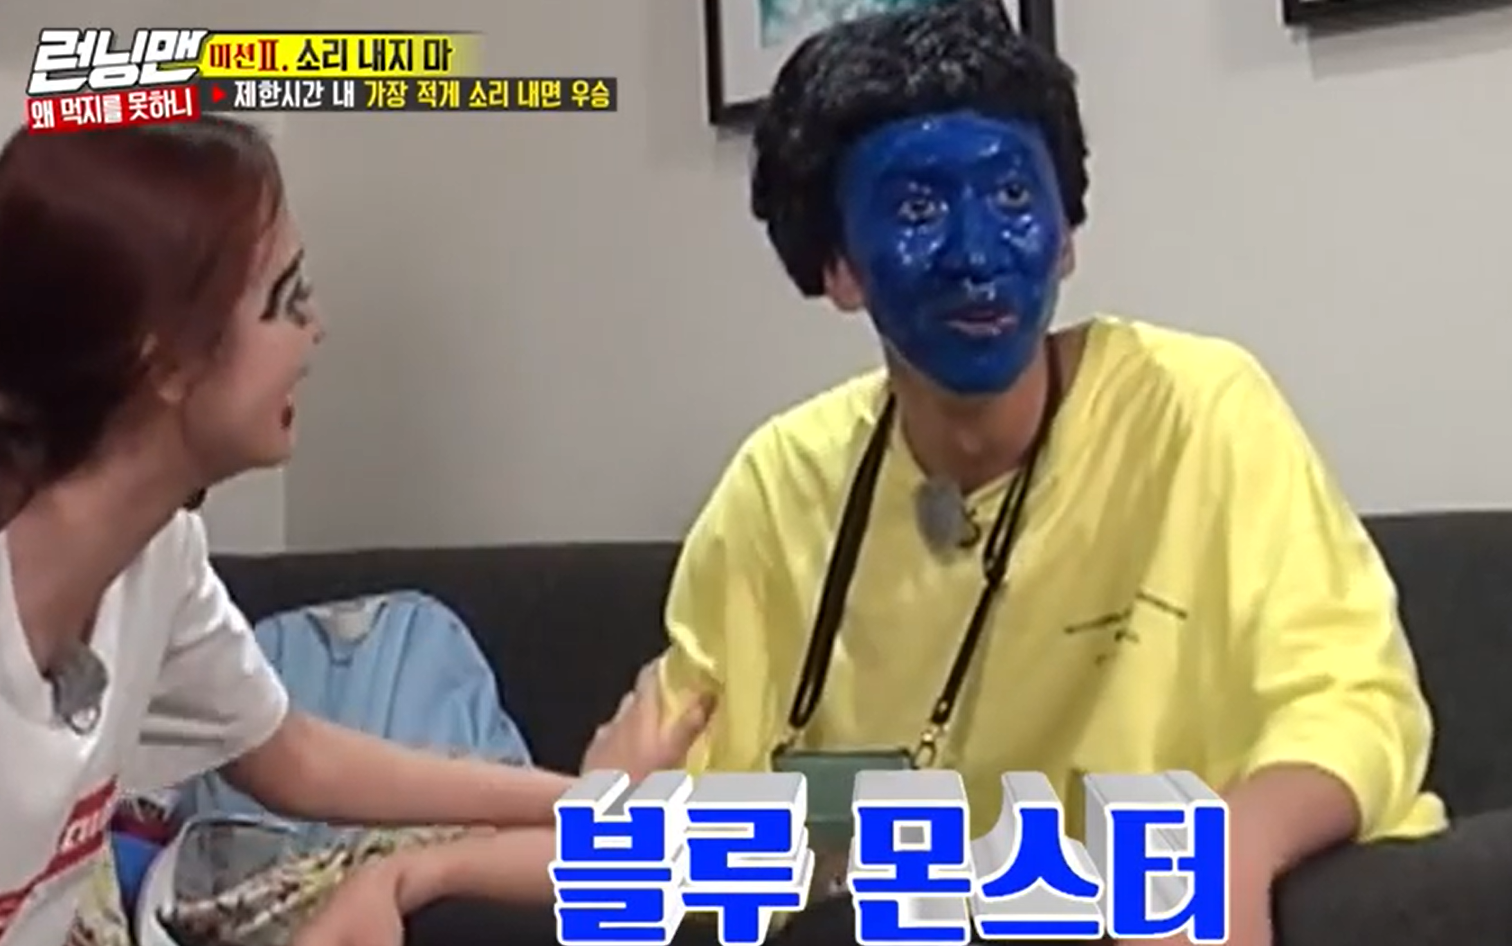 best lee kwang-soo Running Man moments - kwang-soo blue face